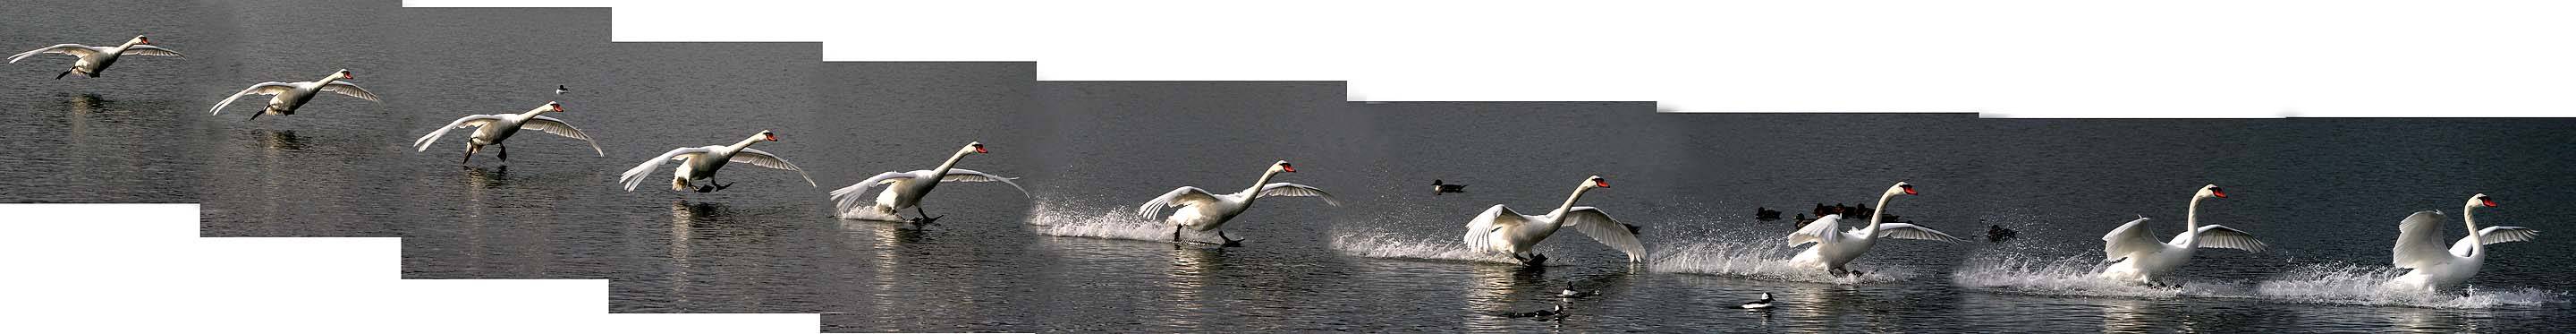 swan landing.7805.jpg